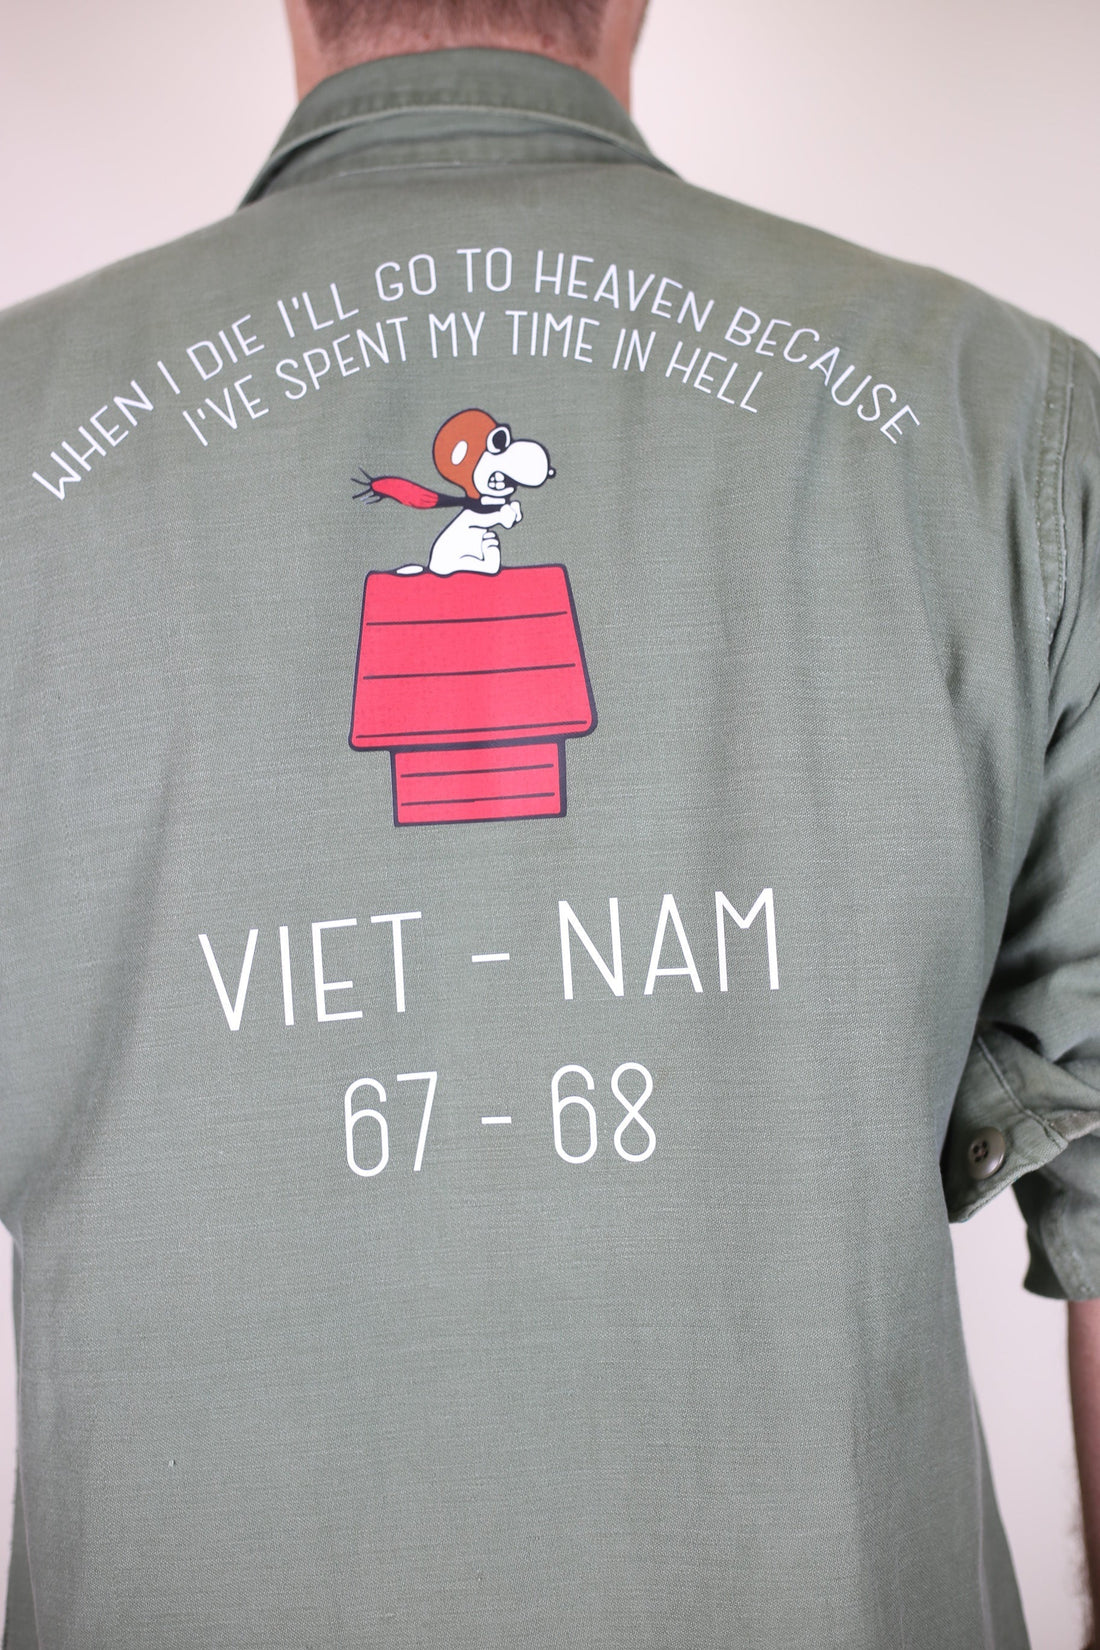 Og 108 US Army Korea era 1950s wool shirt &lt; S - M - L &gt;